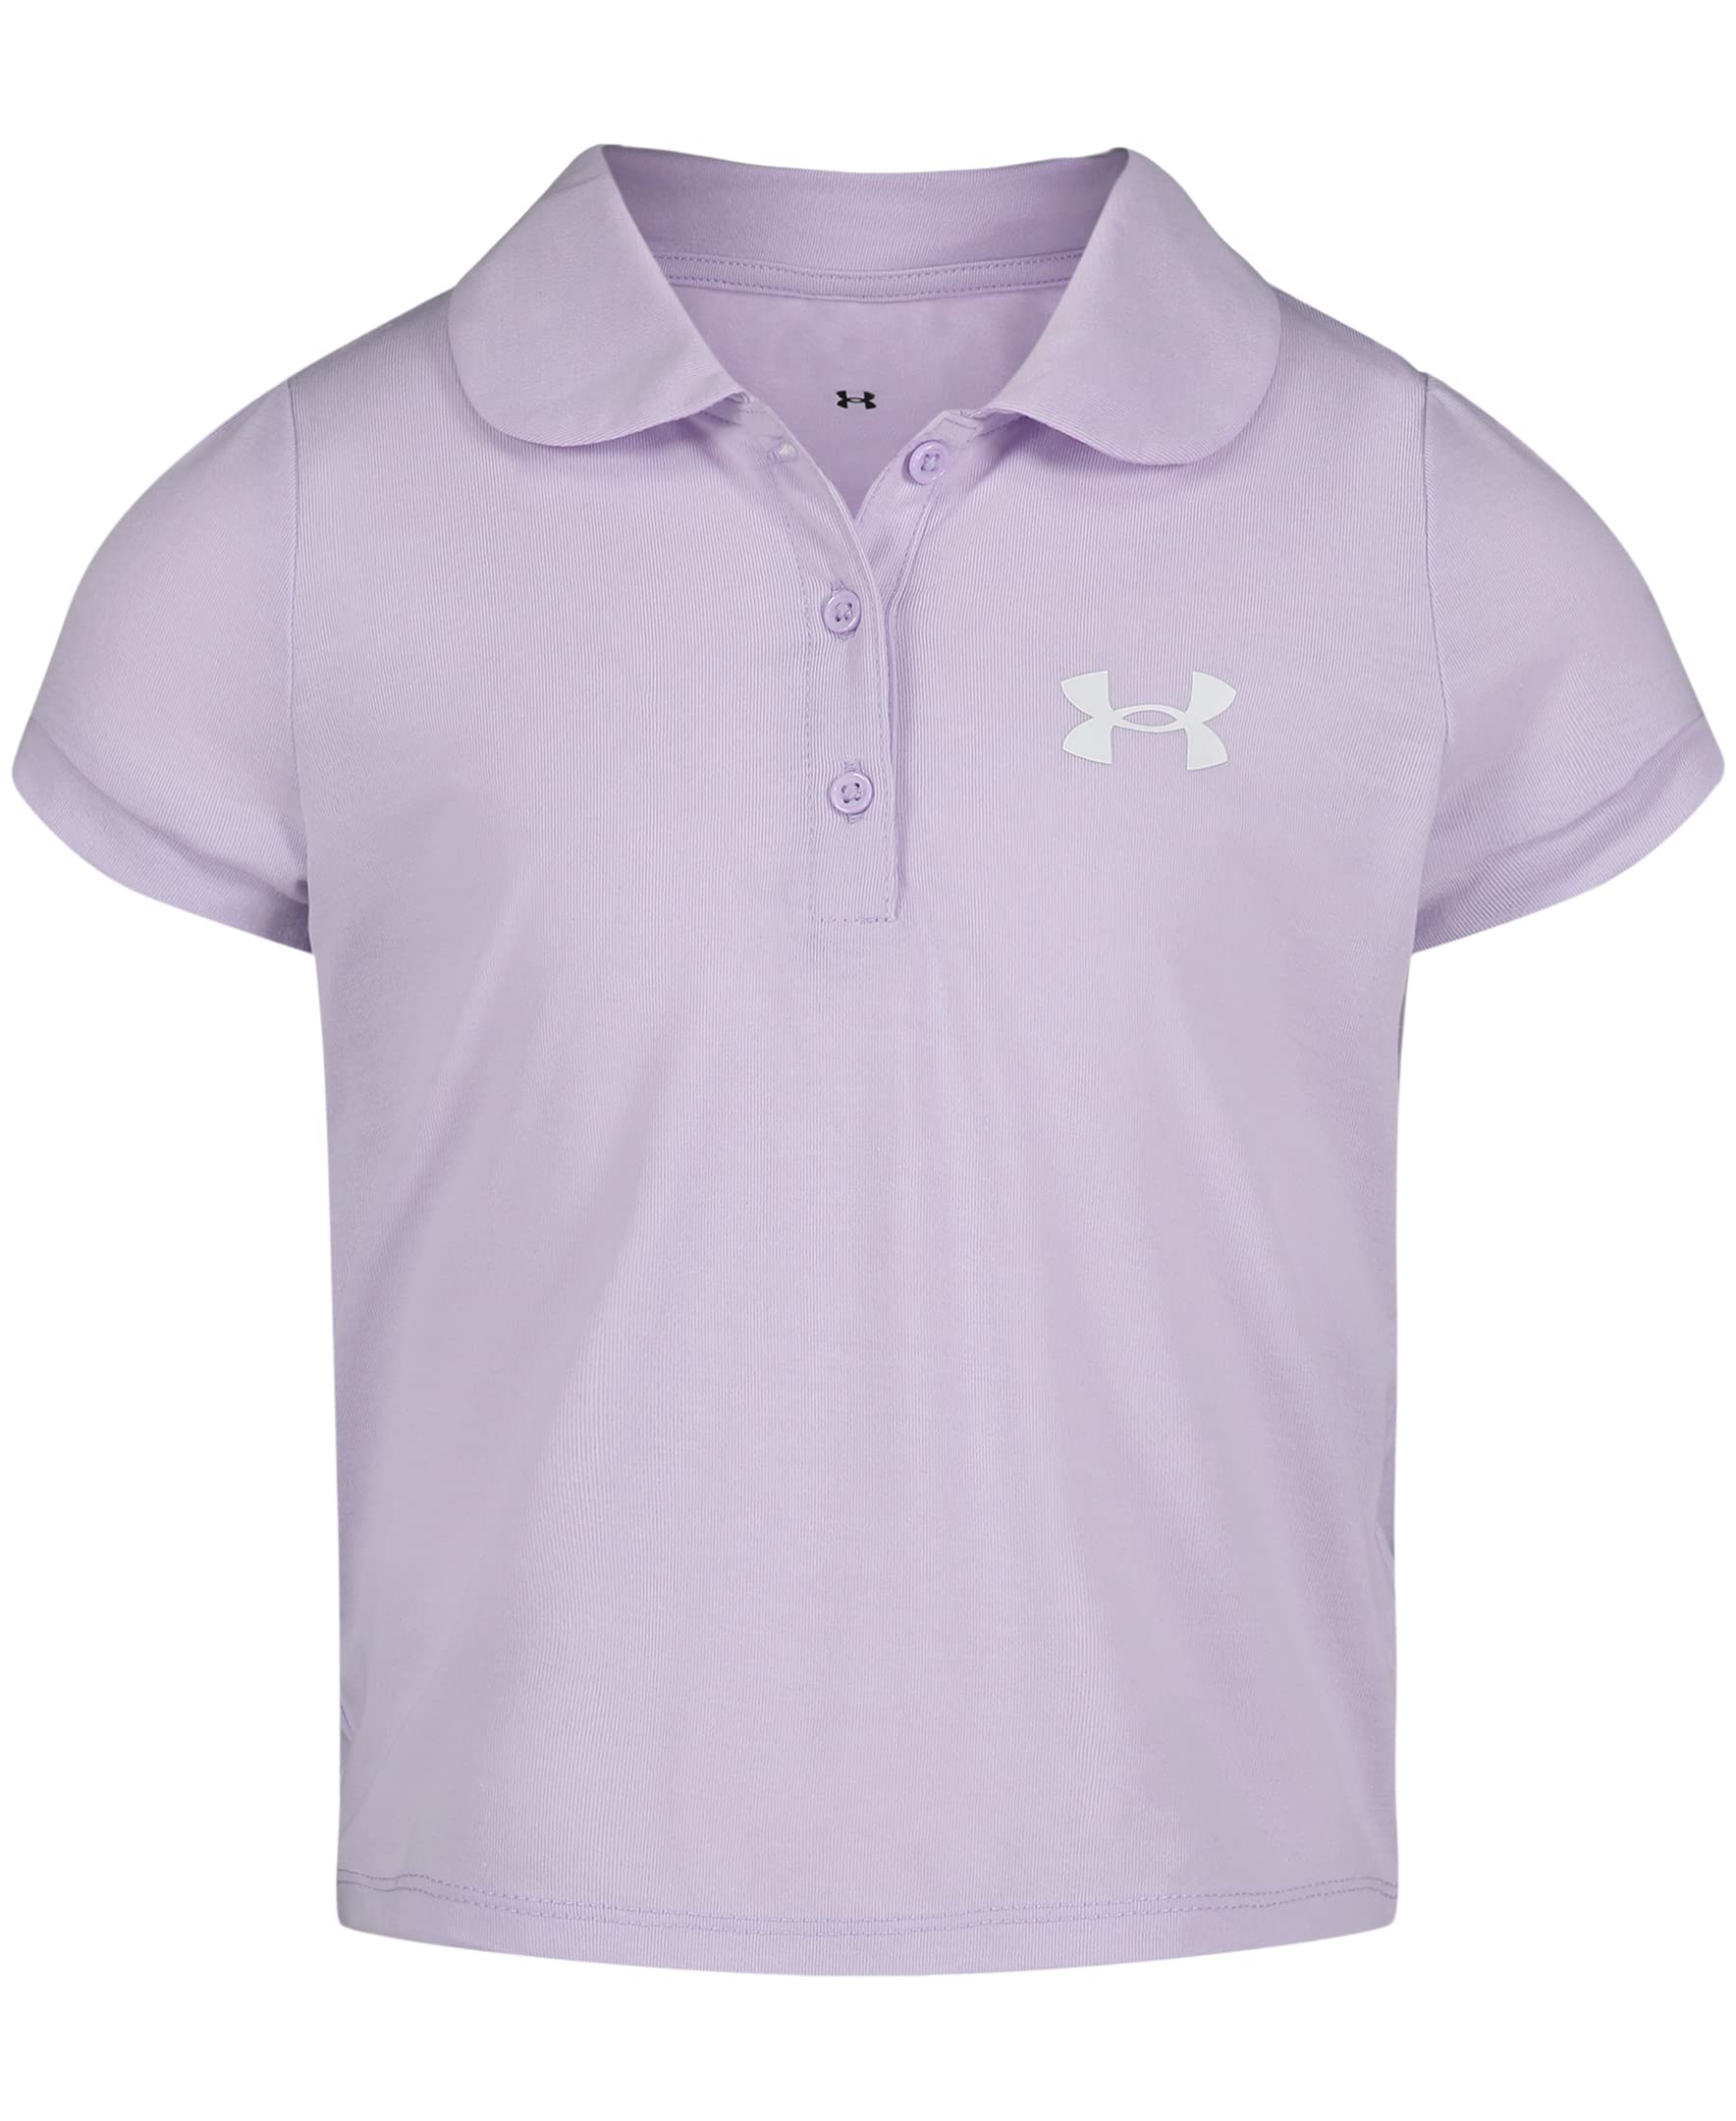 Under Armour Girls' Short Sleeve Polo Collared Shirt, Chest Logo, Soft & Comfortable, Nebula Purple